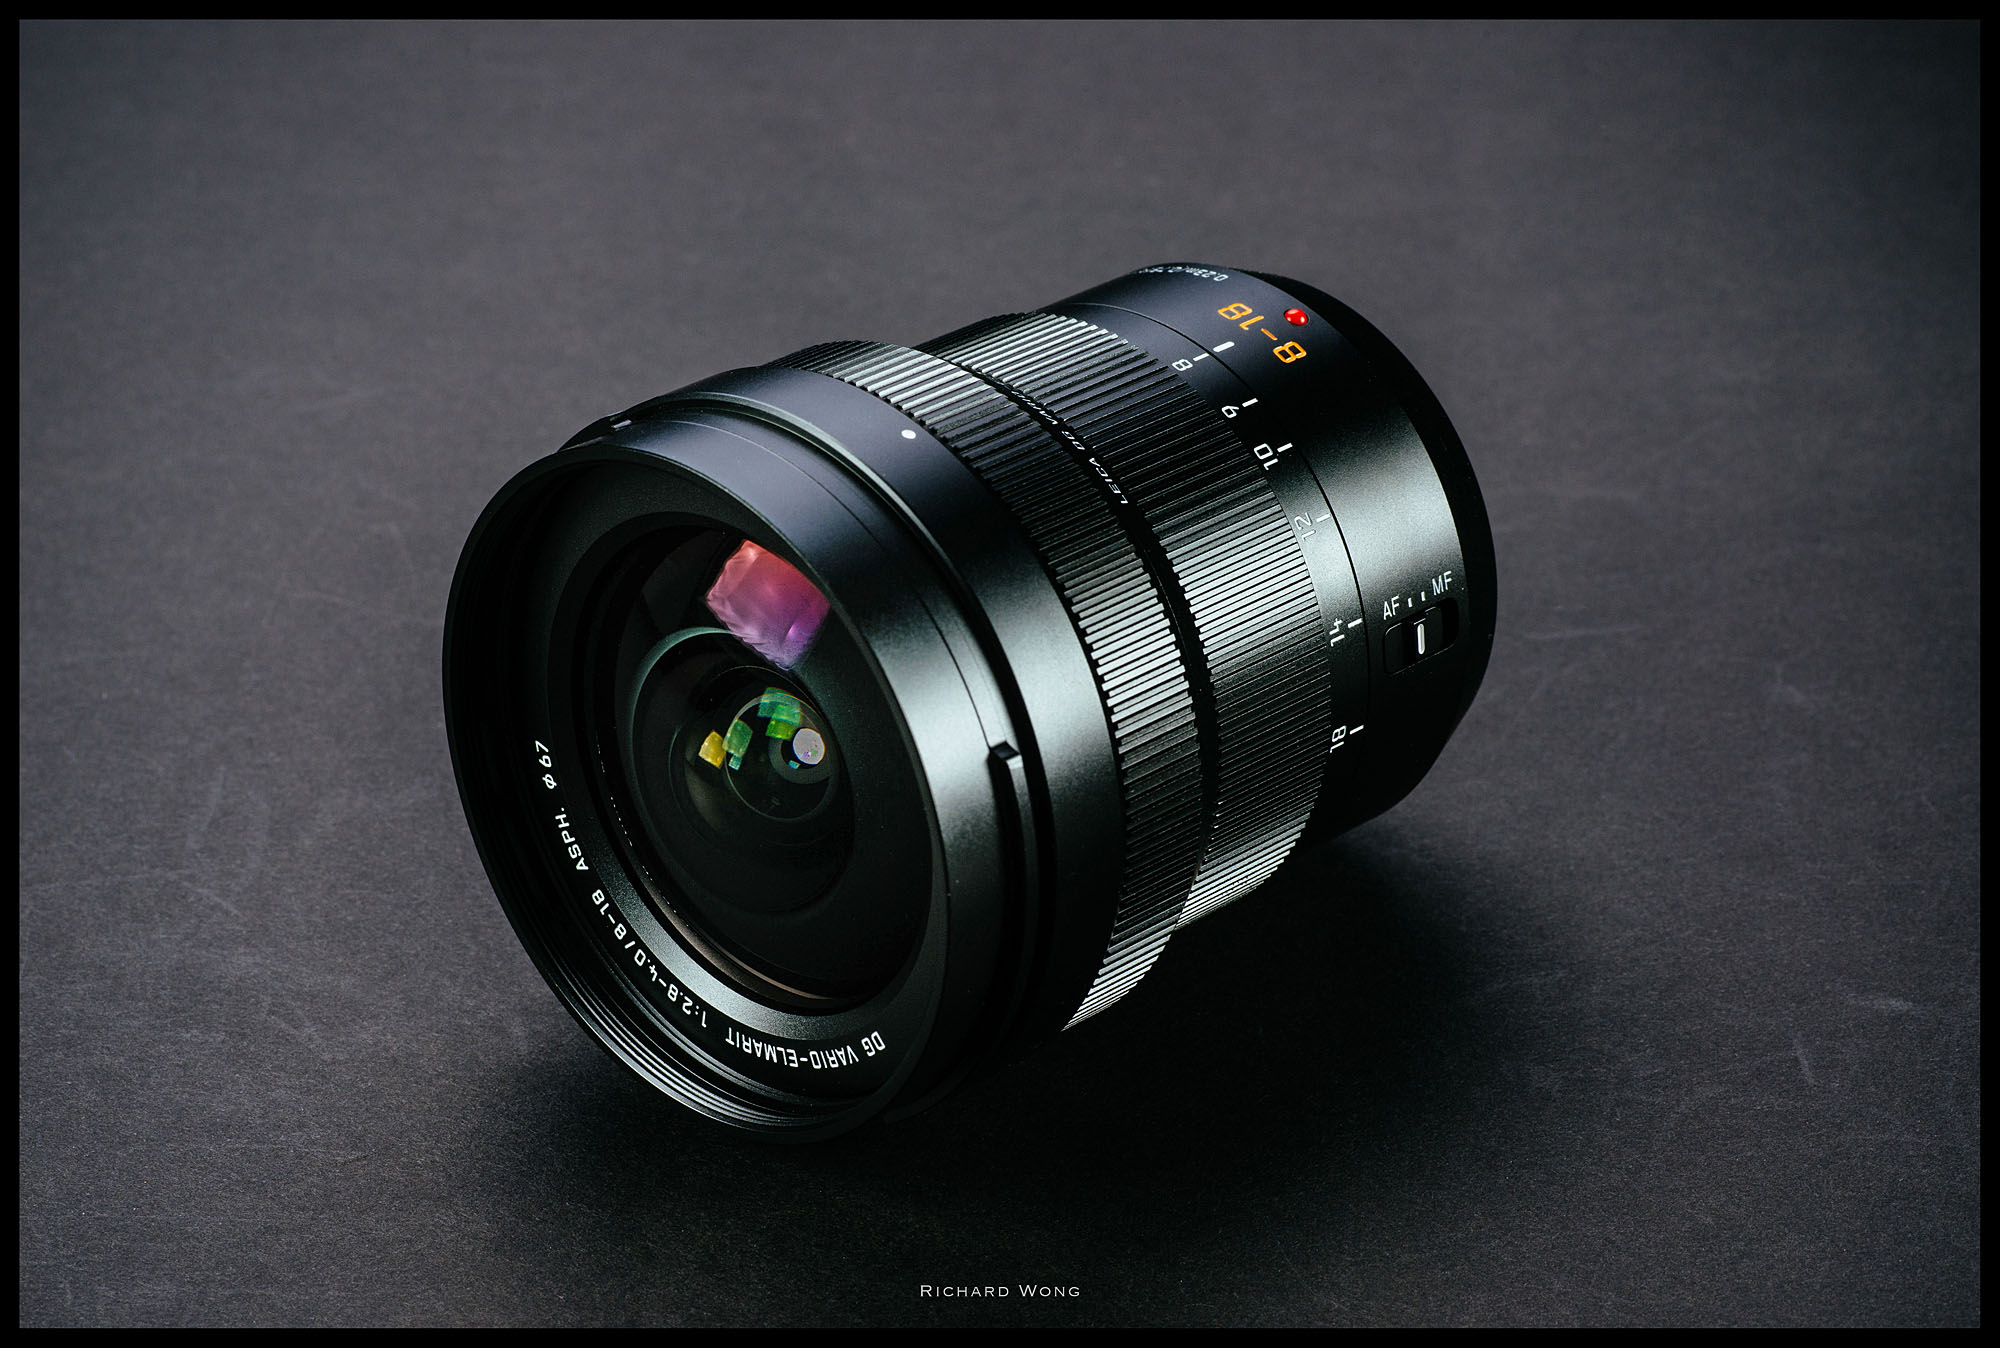 LEICA DG VARIO-ELMARIT 8-18mm f/2.8-4.0 ASPH Review – Review By Richard